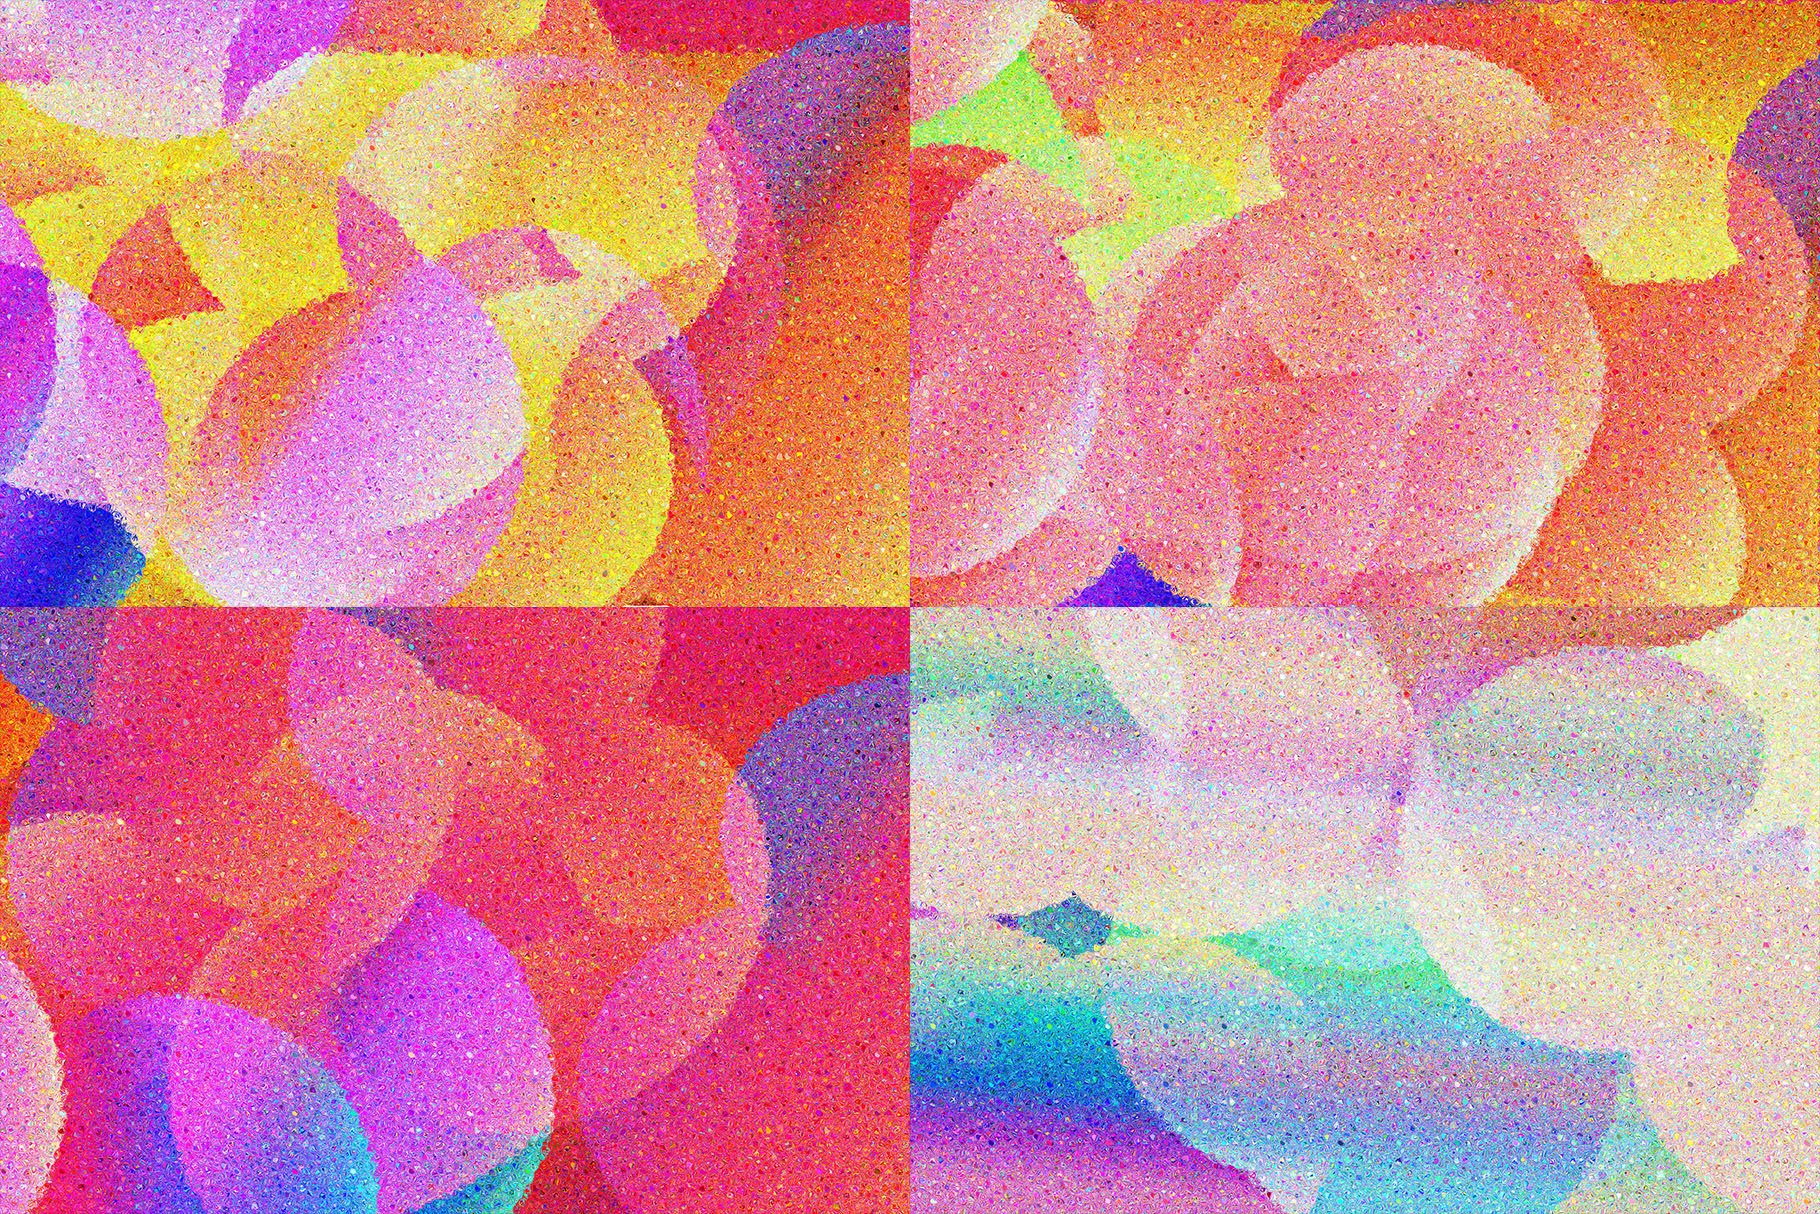 842 抽象的彩色玻璃纹理背景图片素材 Abstract Colorful Glass Textures